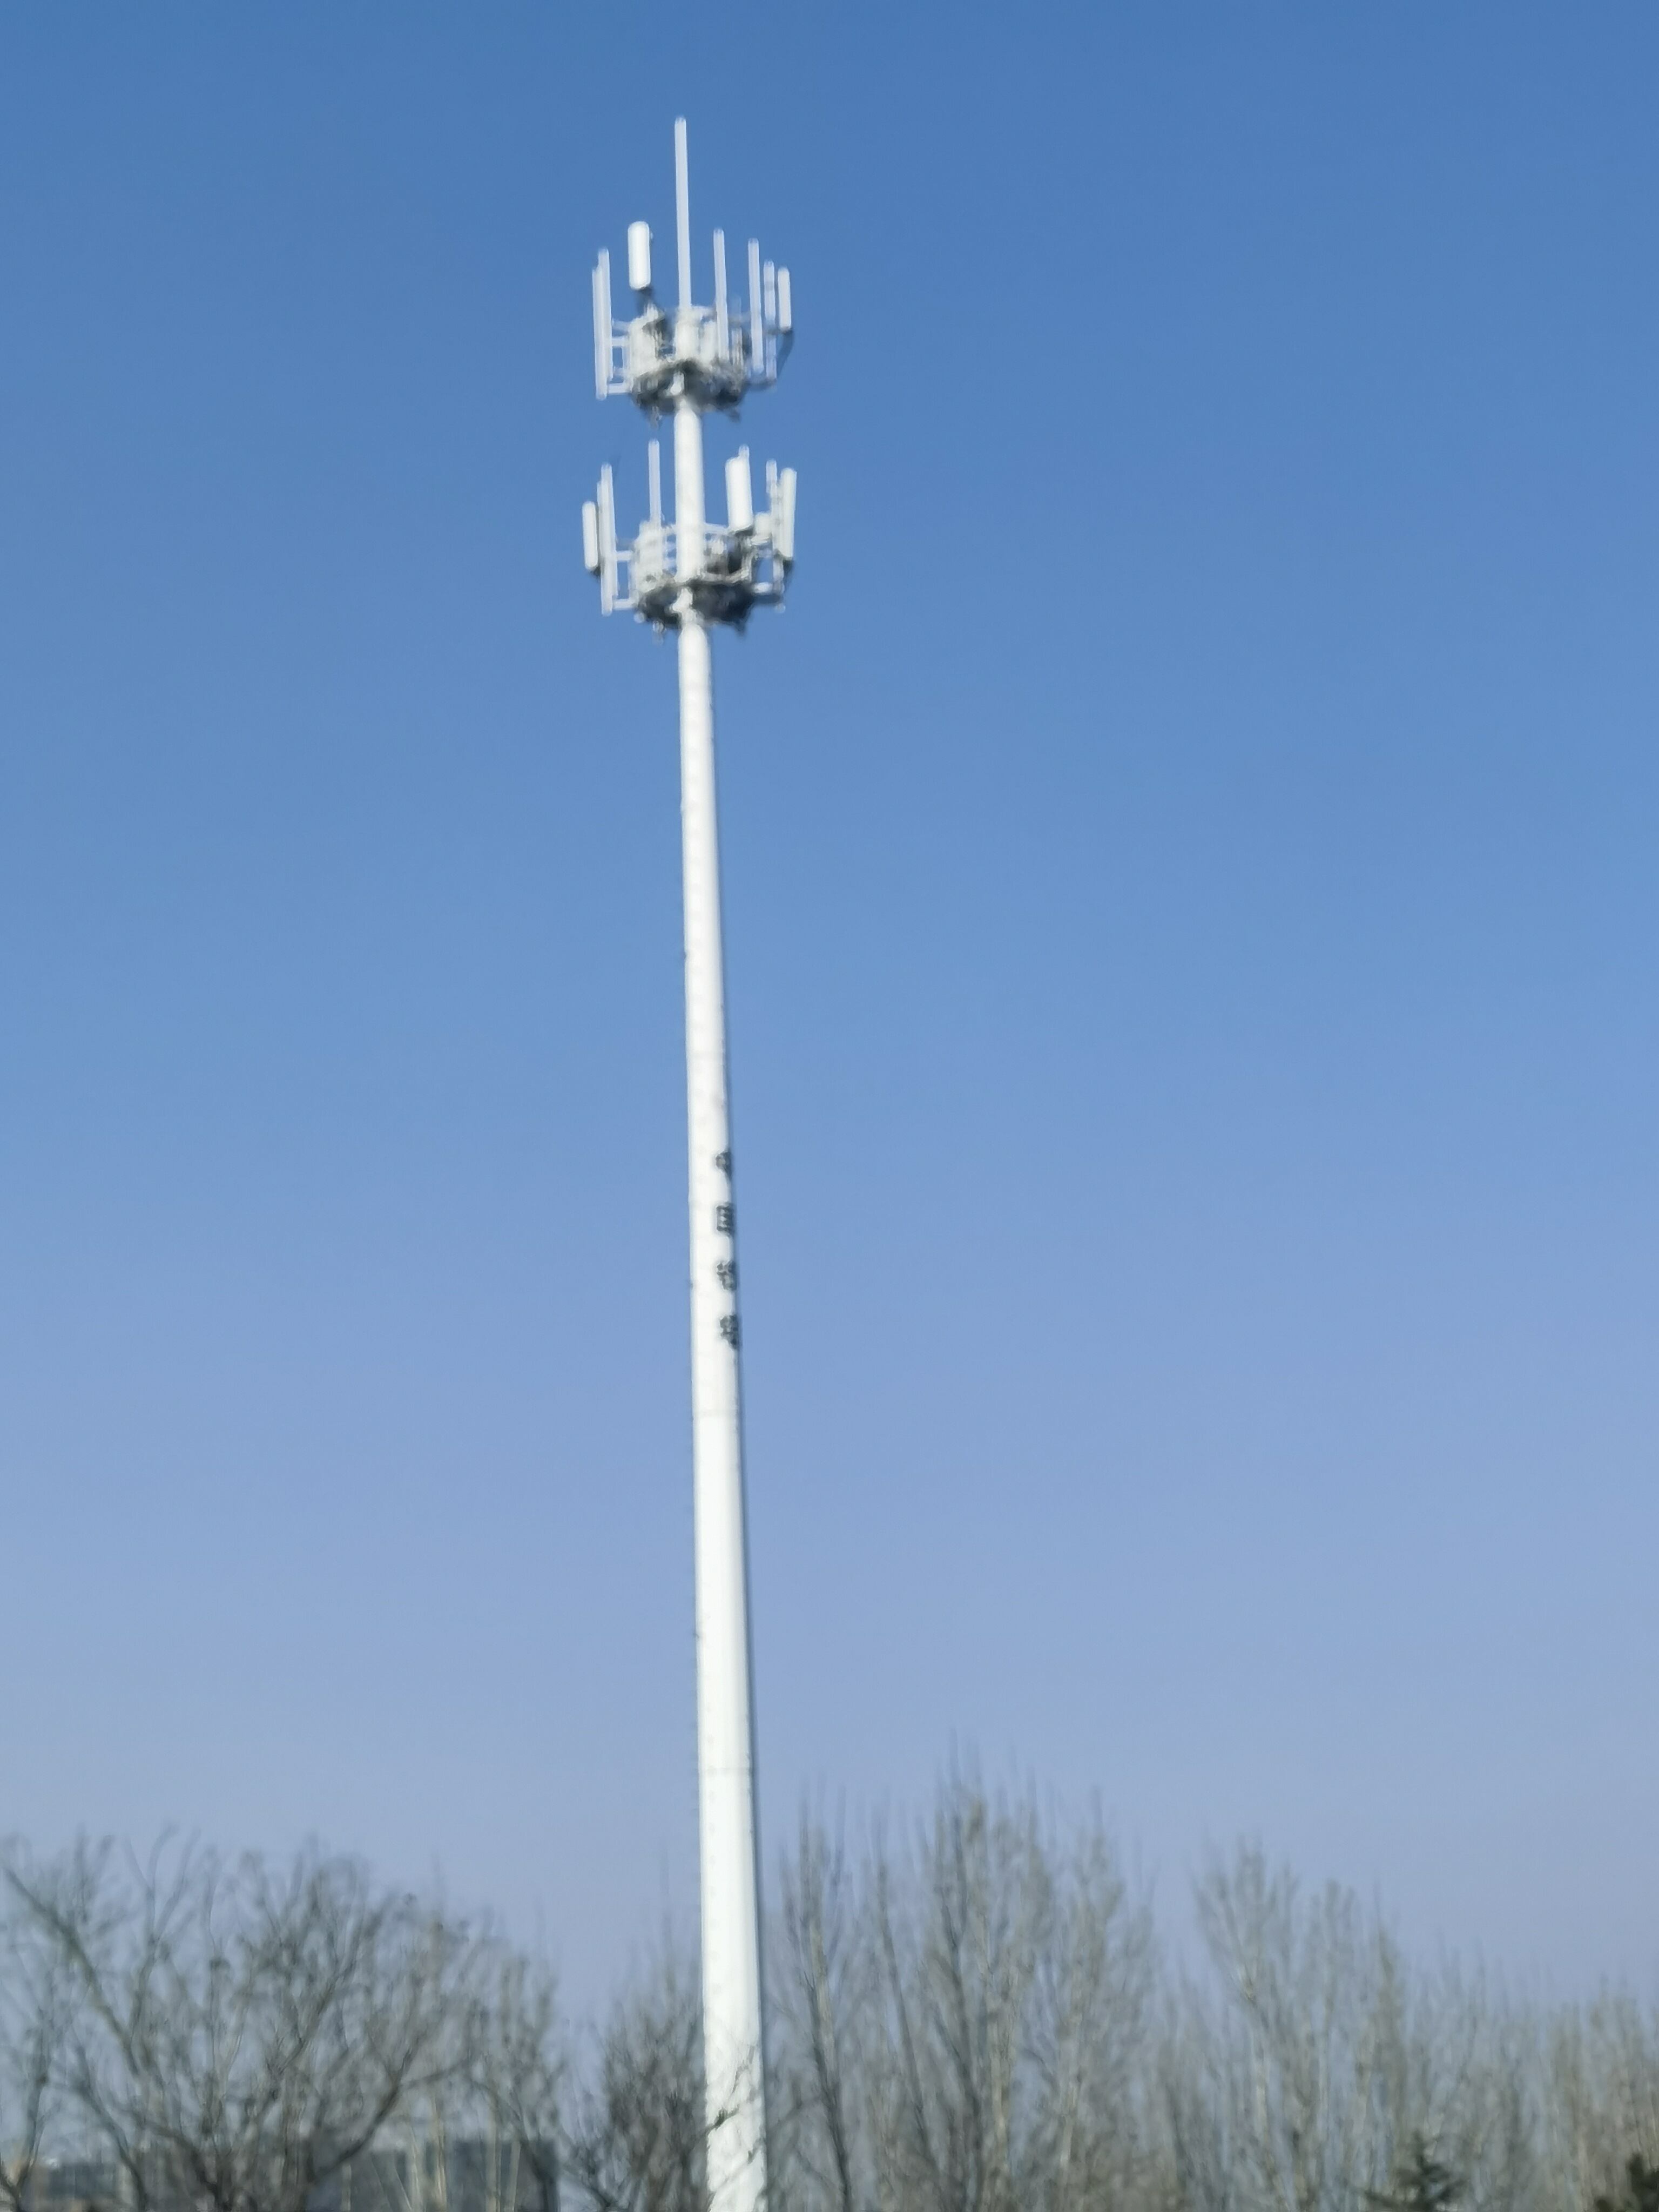 Monopole Tower Antenna Communication Transmission details